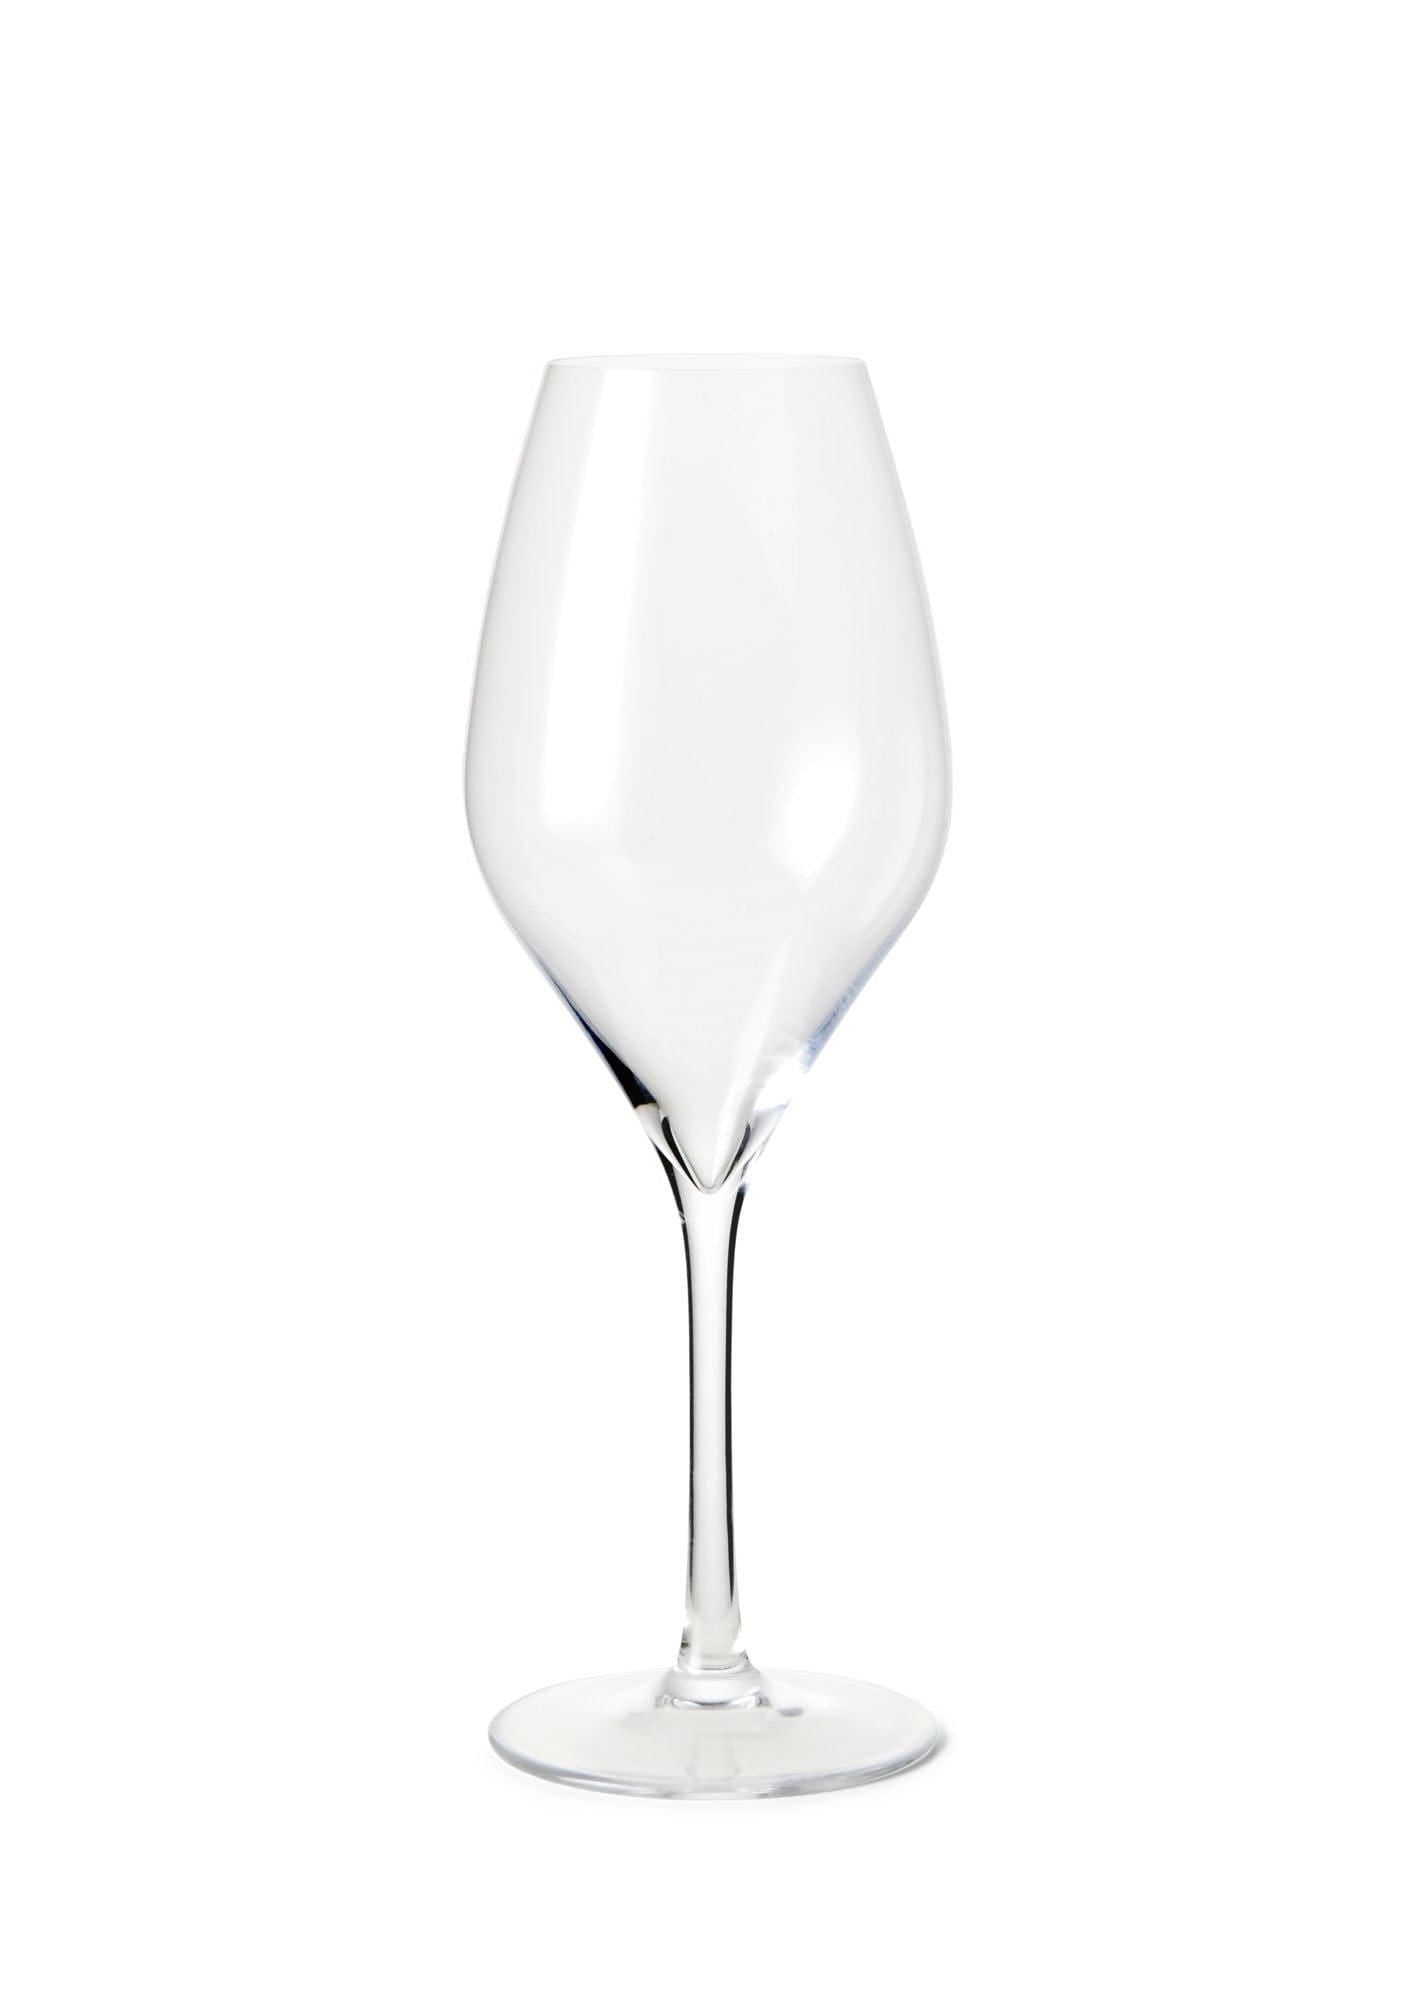 Rosendahl Premium -Champagnerglas -Set von 2 370 ml, klar